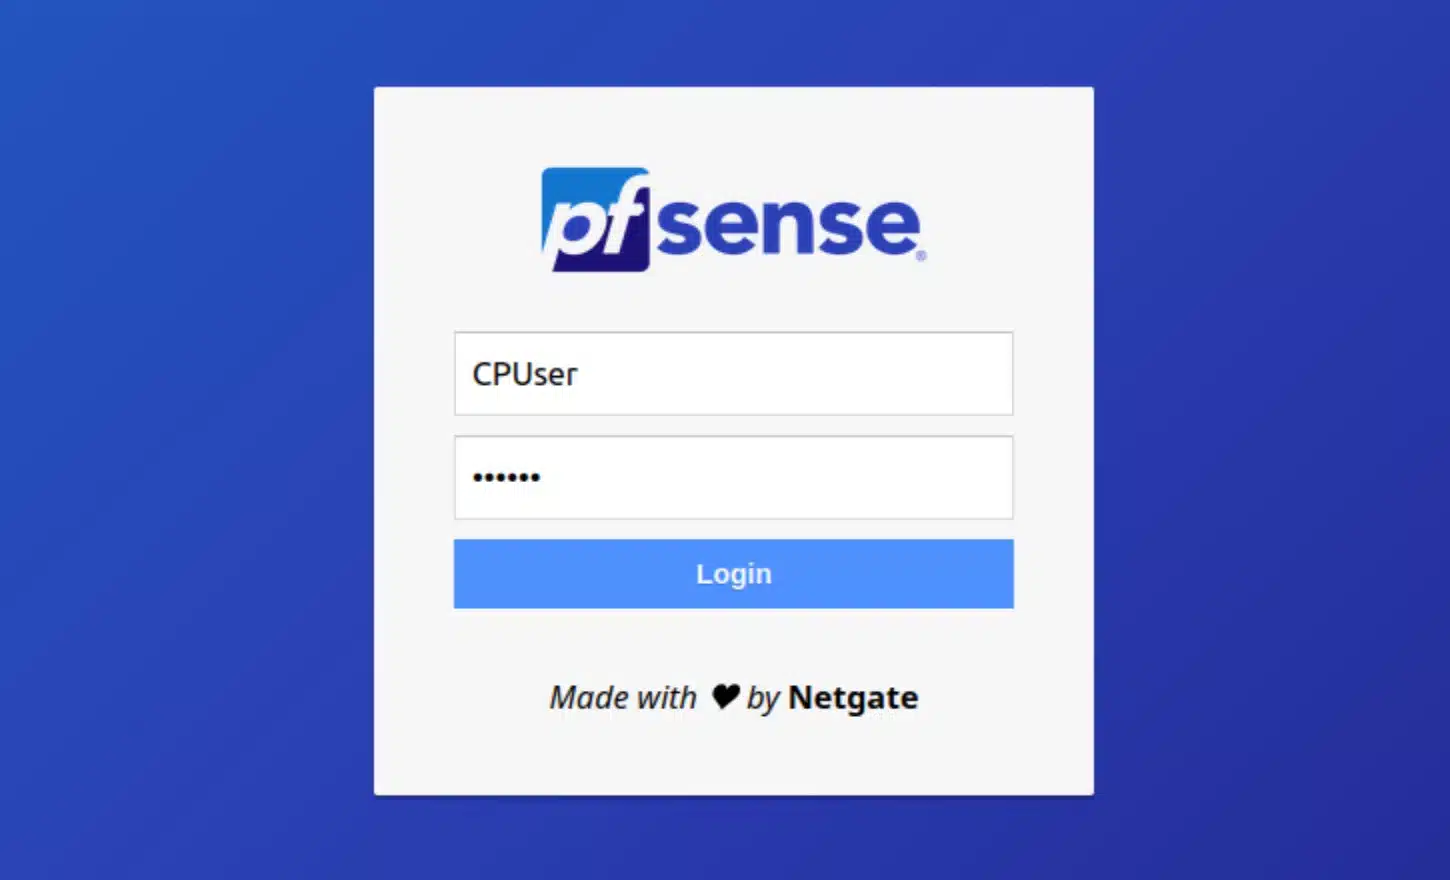 pfSense - Captive Portal - CPUser Login